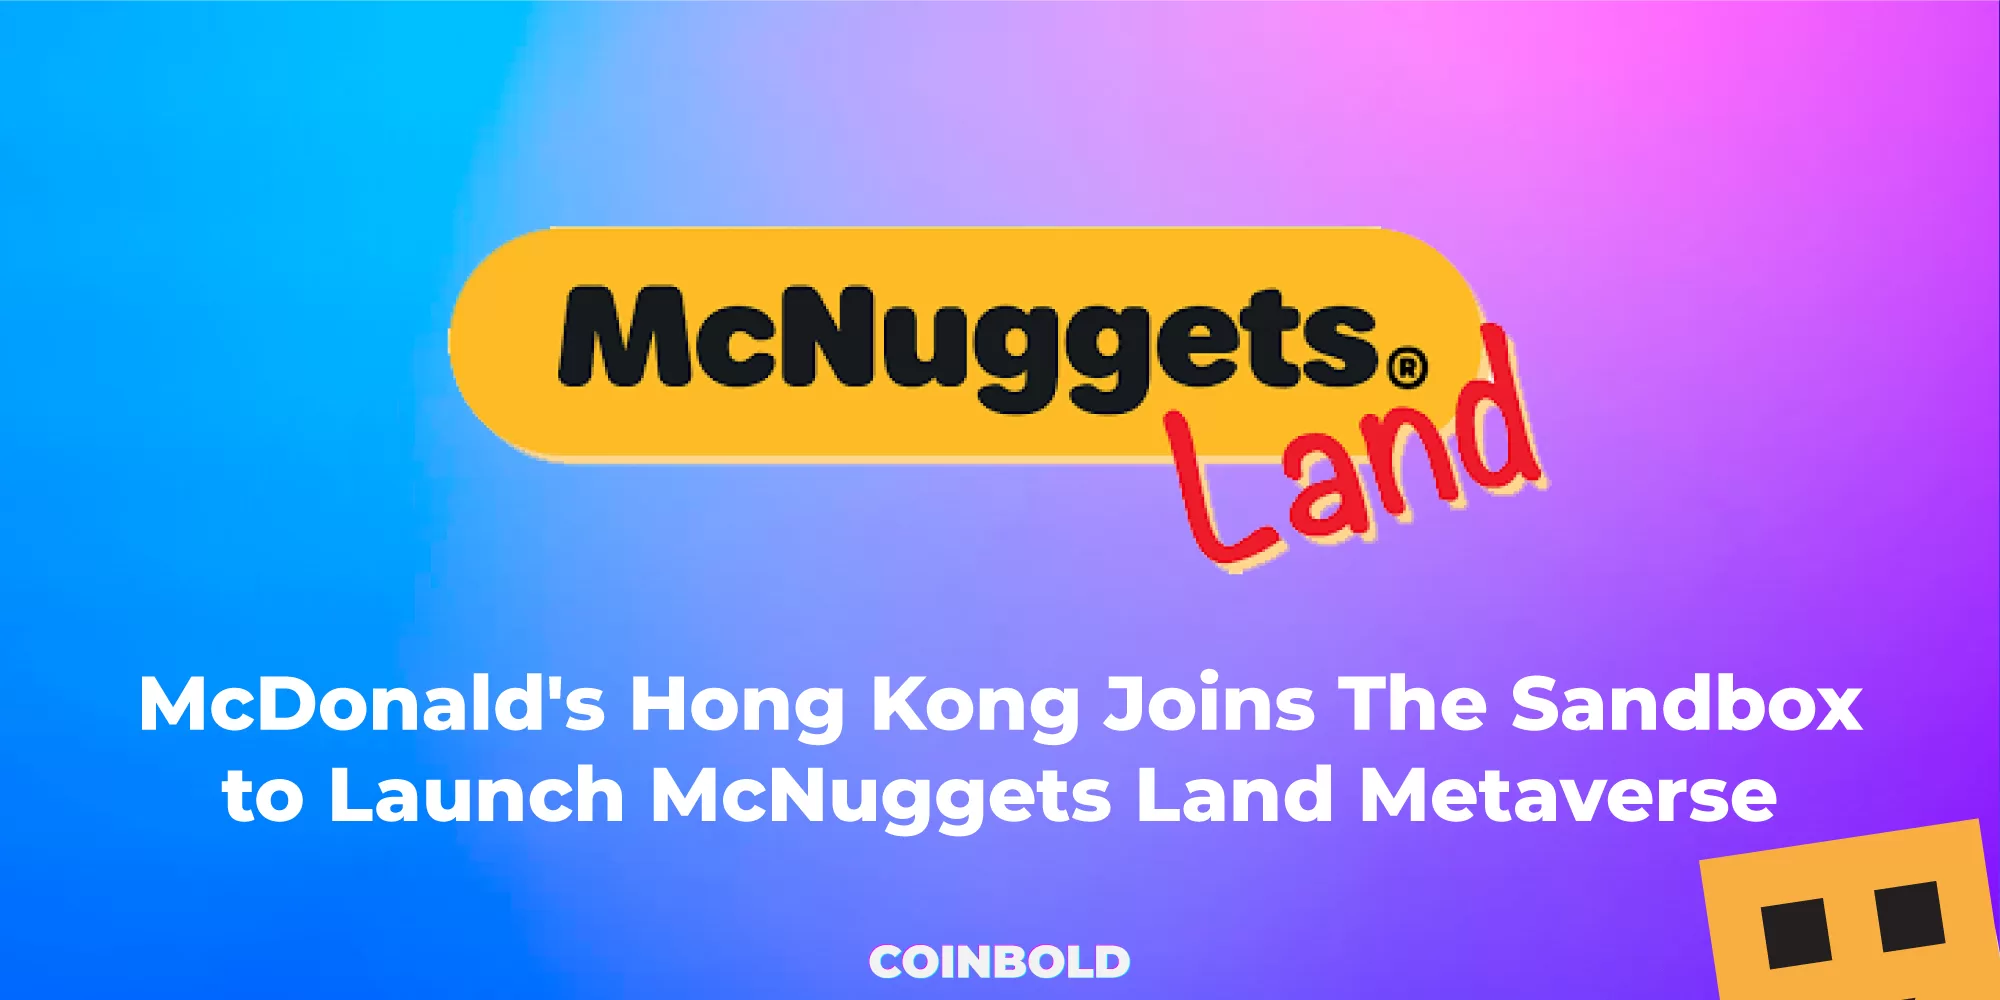 McDonald's Hong Kong Joins The Sandbox to Launch McNuggets Land Metaverse